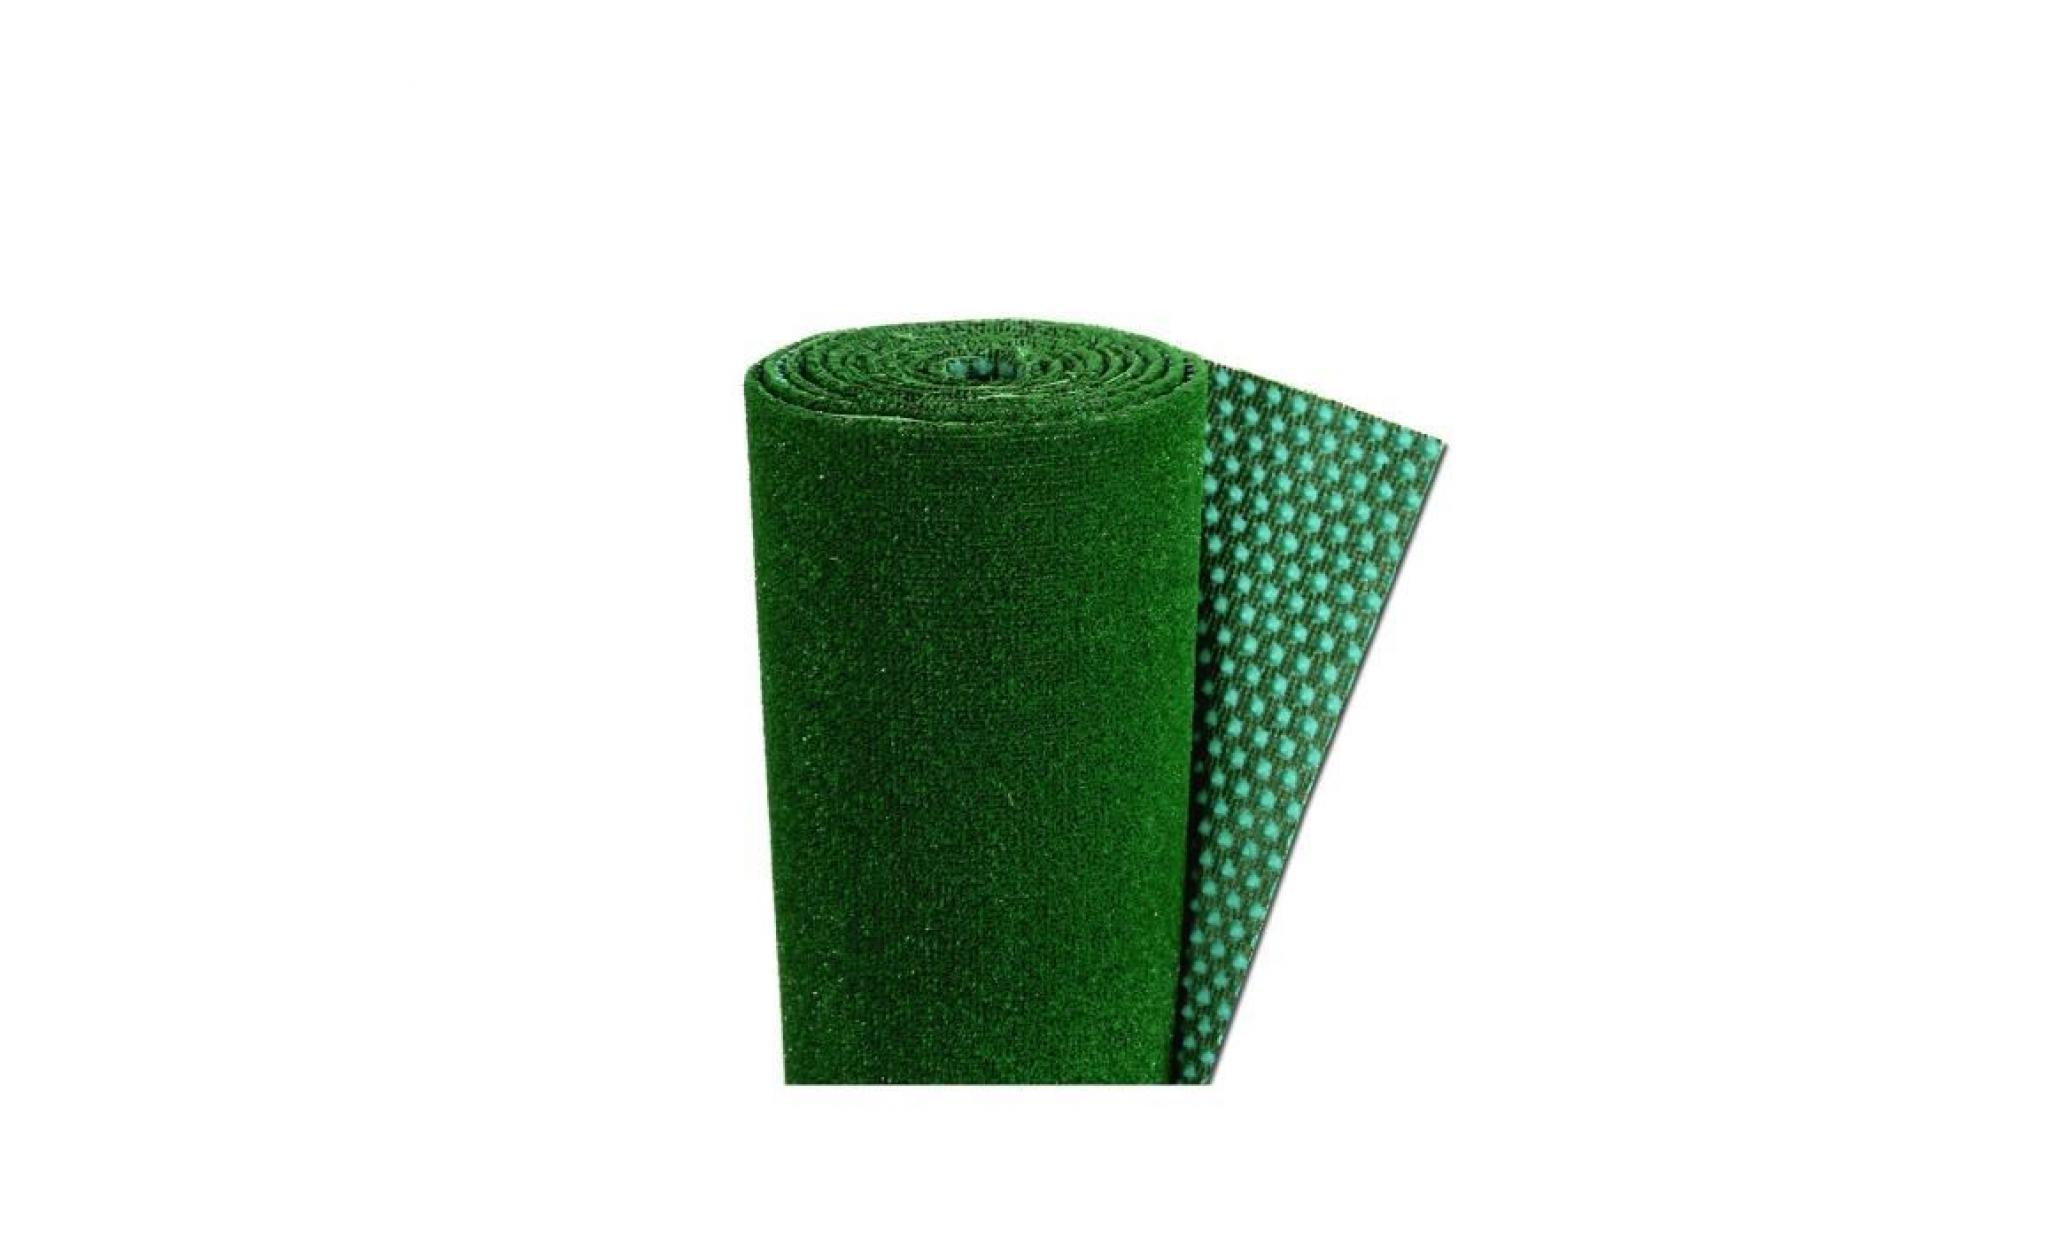 york   tapis type gazon artificiel avec nubs – pour jardin, terrasse, balcon   vert   [200x450 cm] pas cher